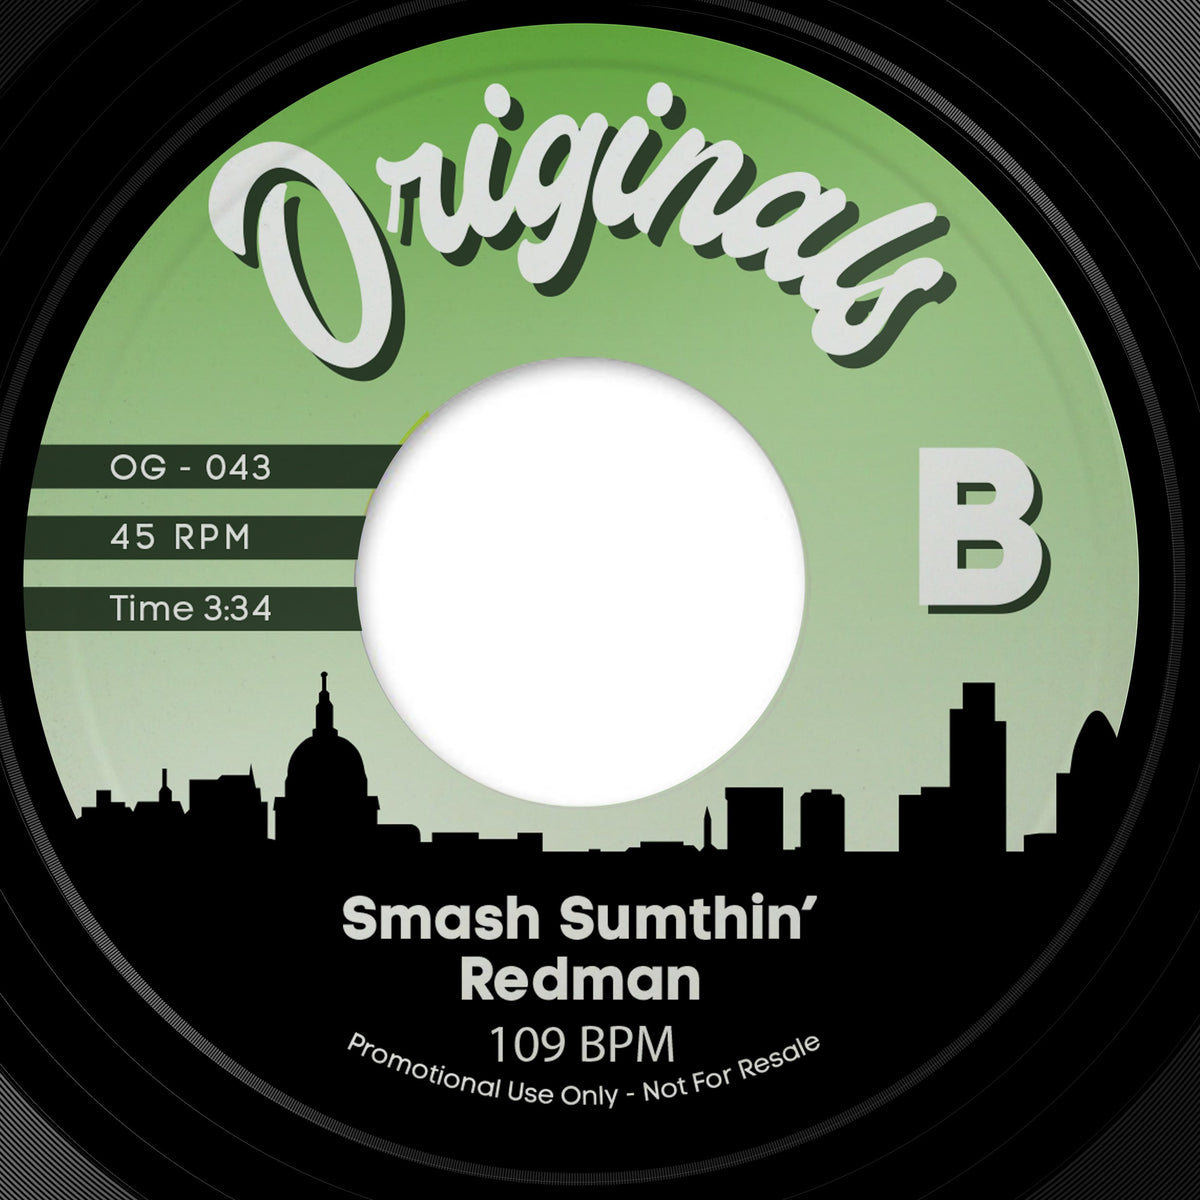 Q-Tip - Breathe & Stop b/w Redman - Smash Sumthin'